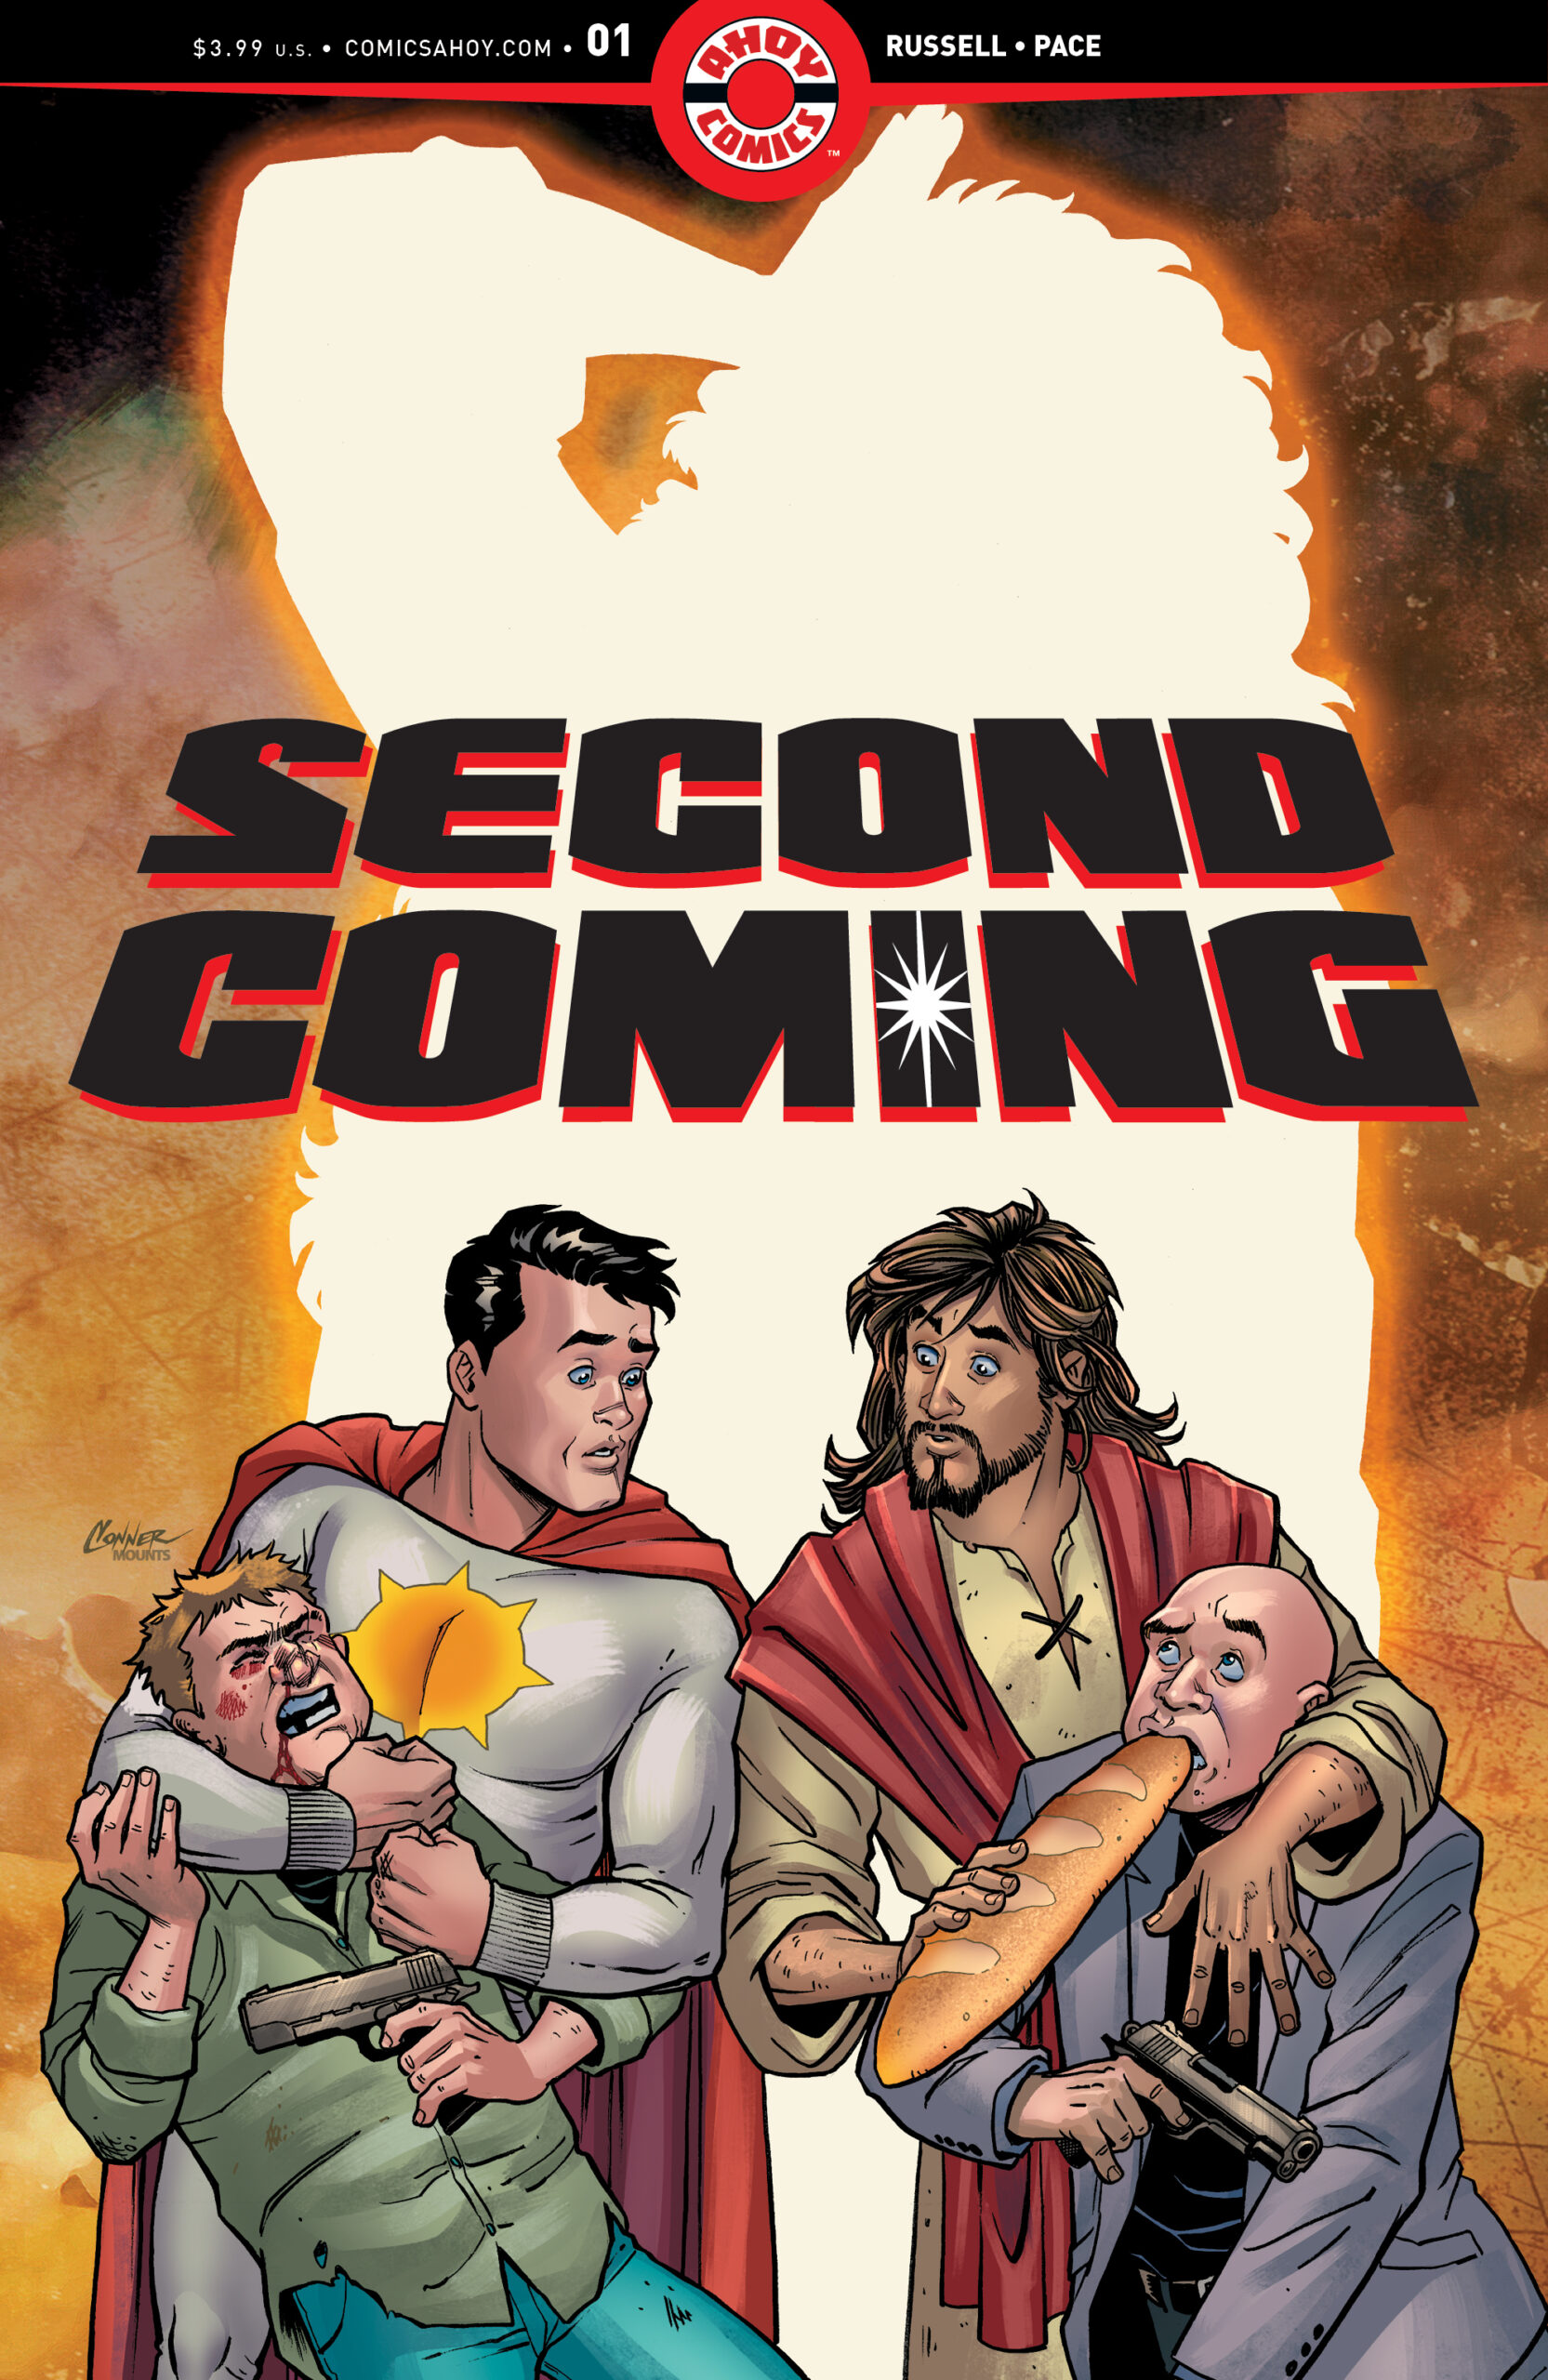 Cool comic alert: Jesus Christ edition!